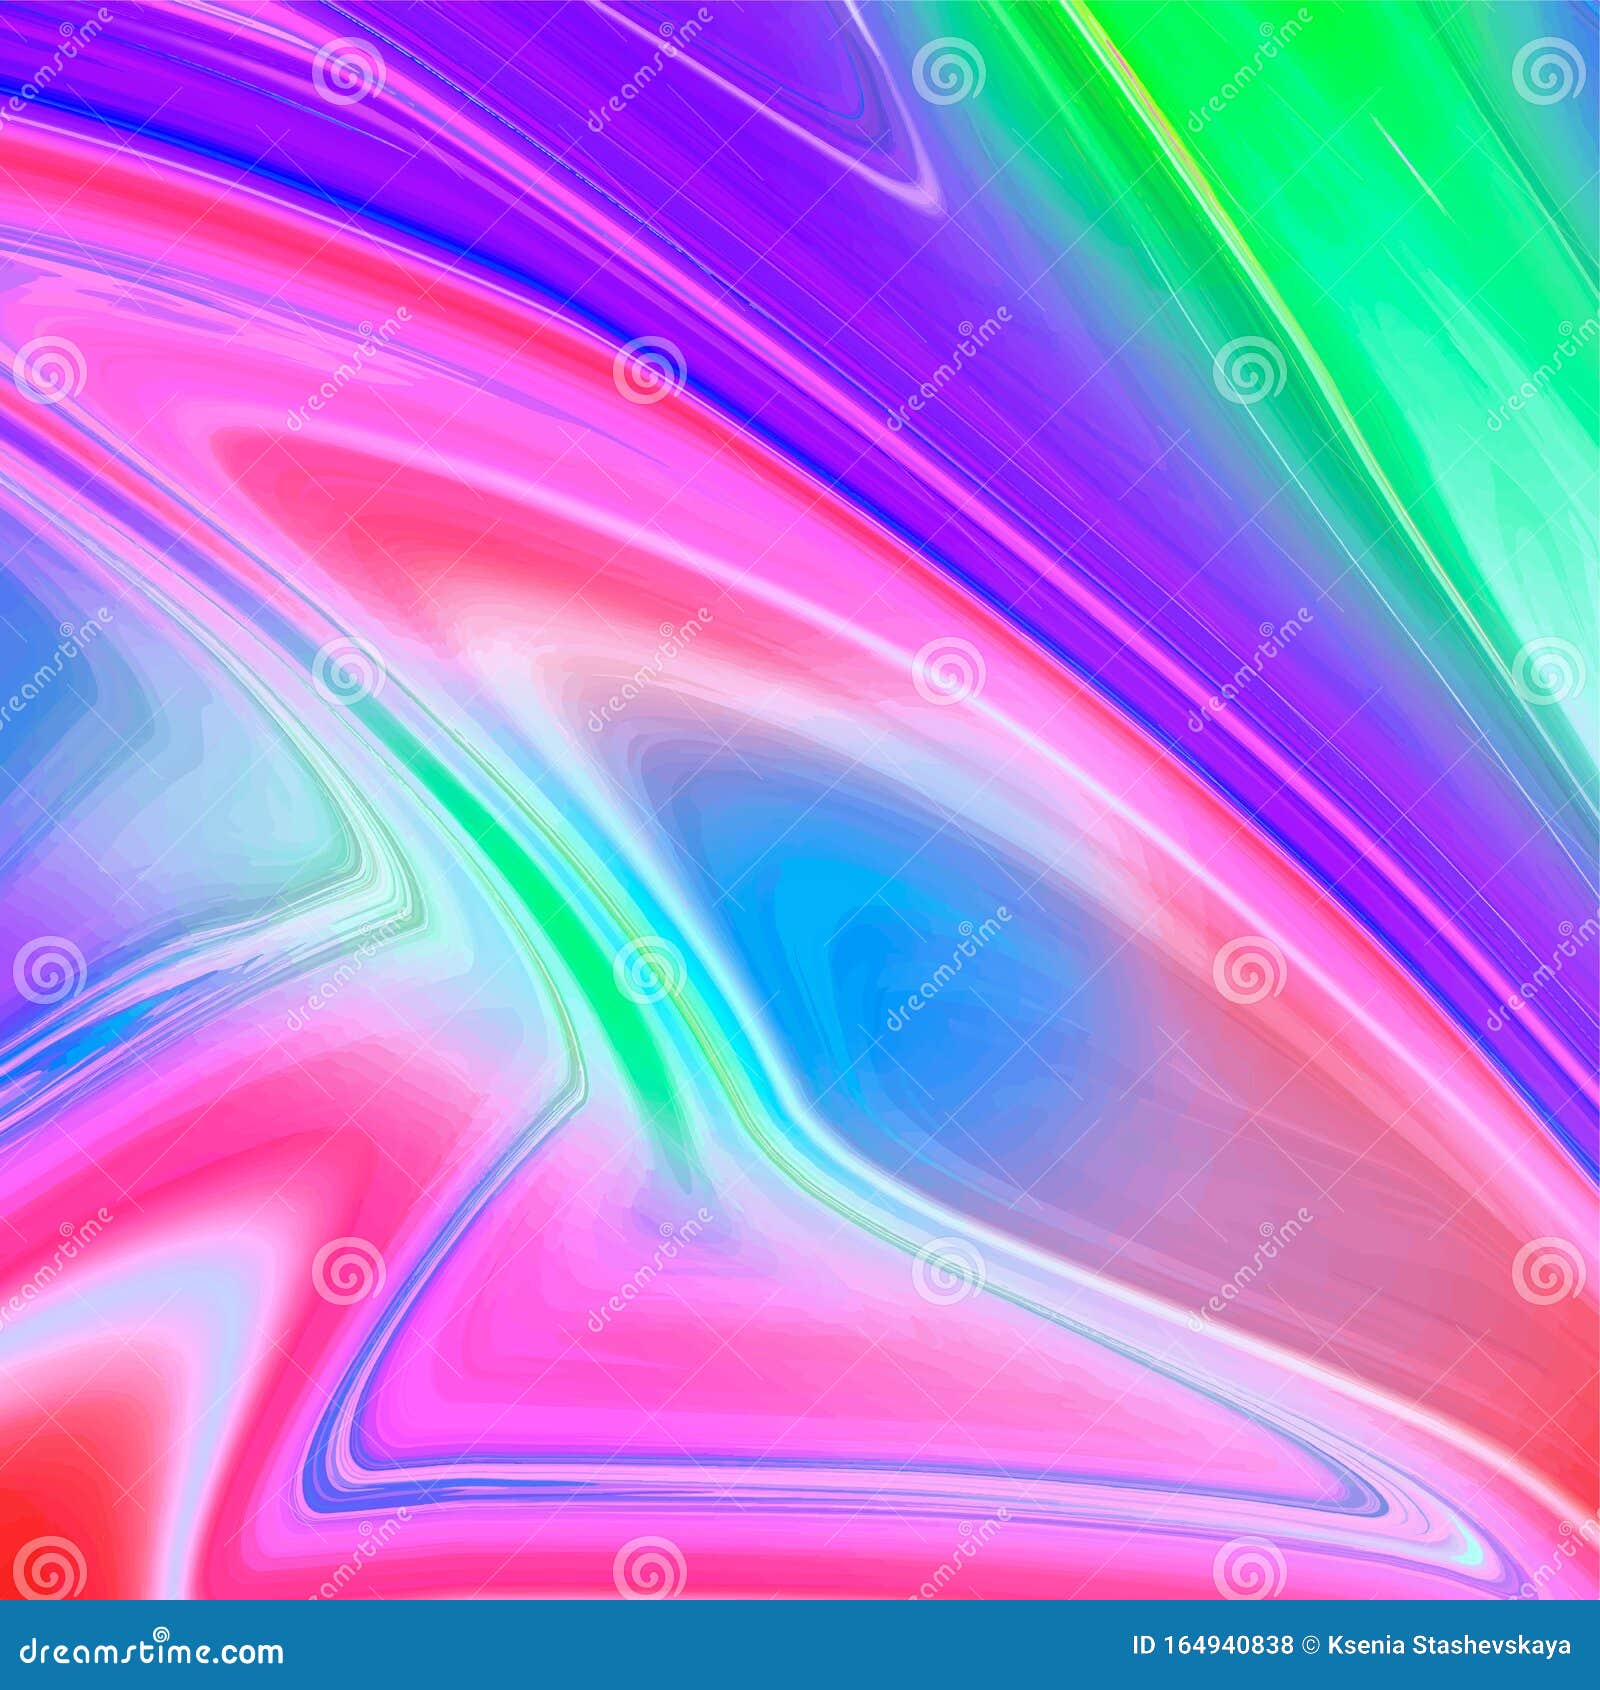 Abstract Neon Futuristic Galaxy Background Stock Illustration